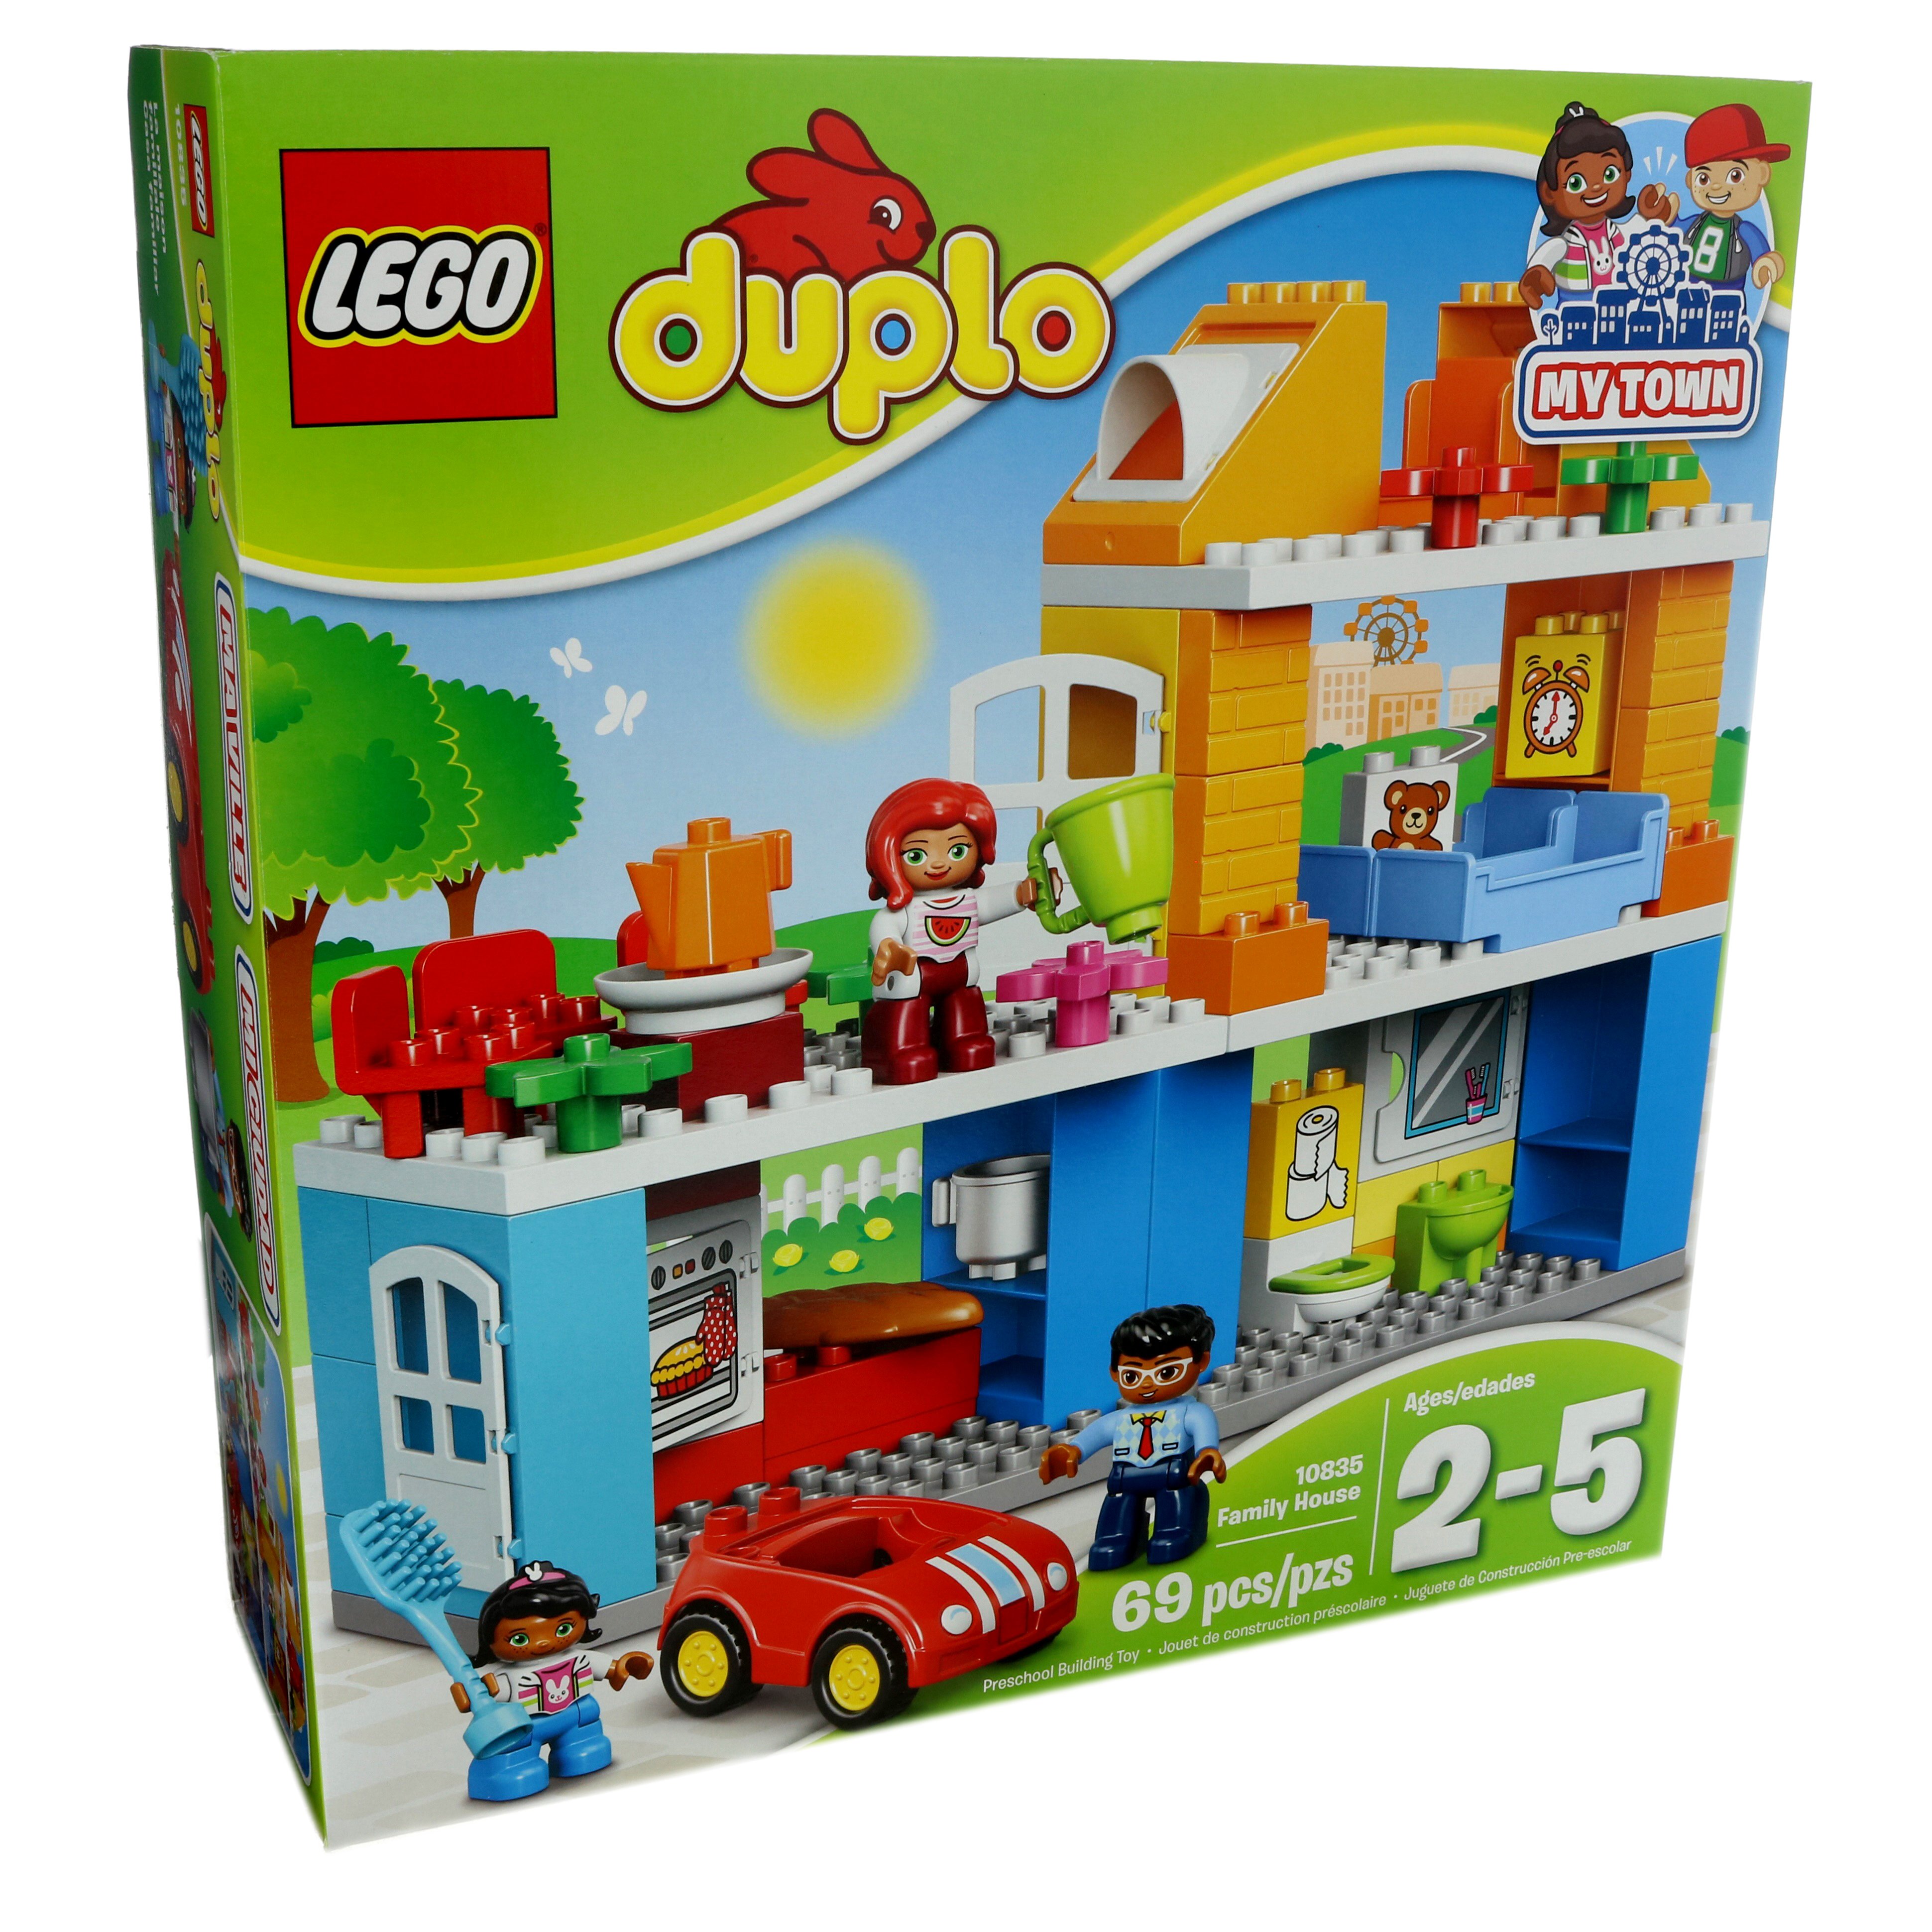 LEGO Duplo Family House Lego & Building Blocks at H-E-B